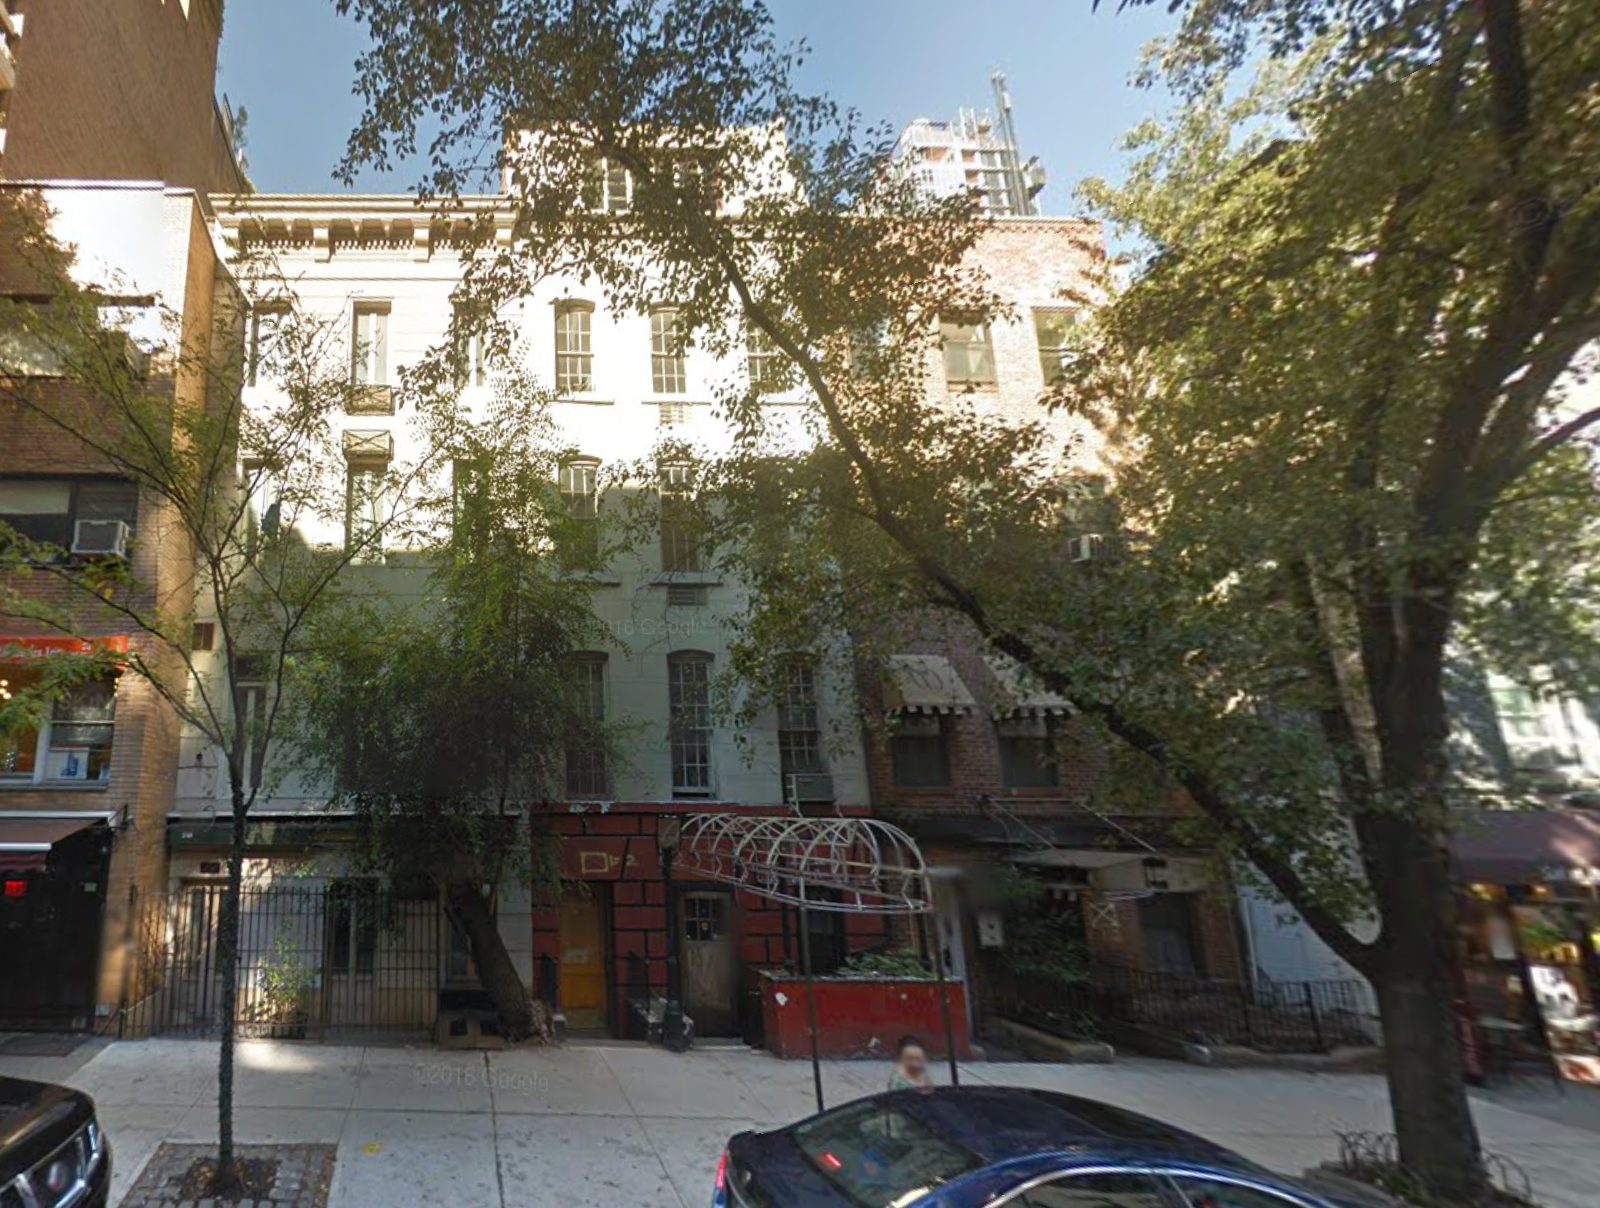 249 East 50th Street, image via Google Maps